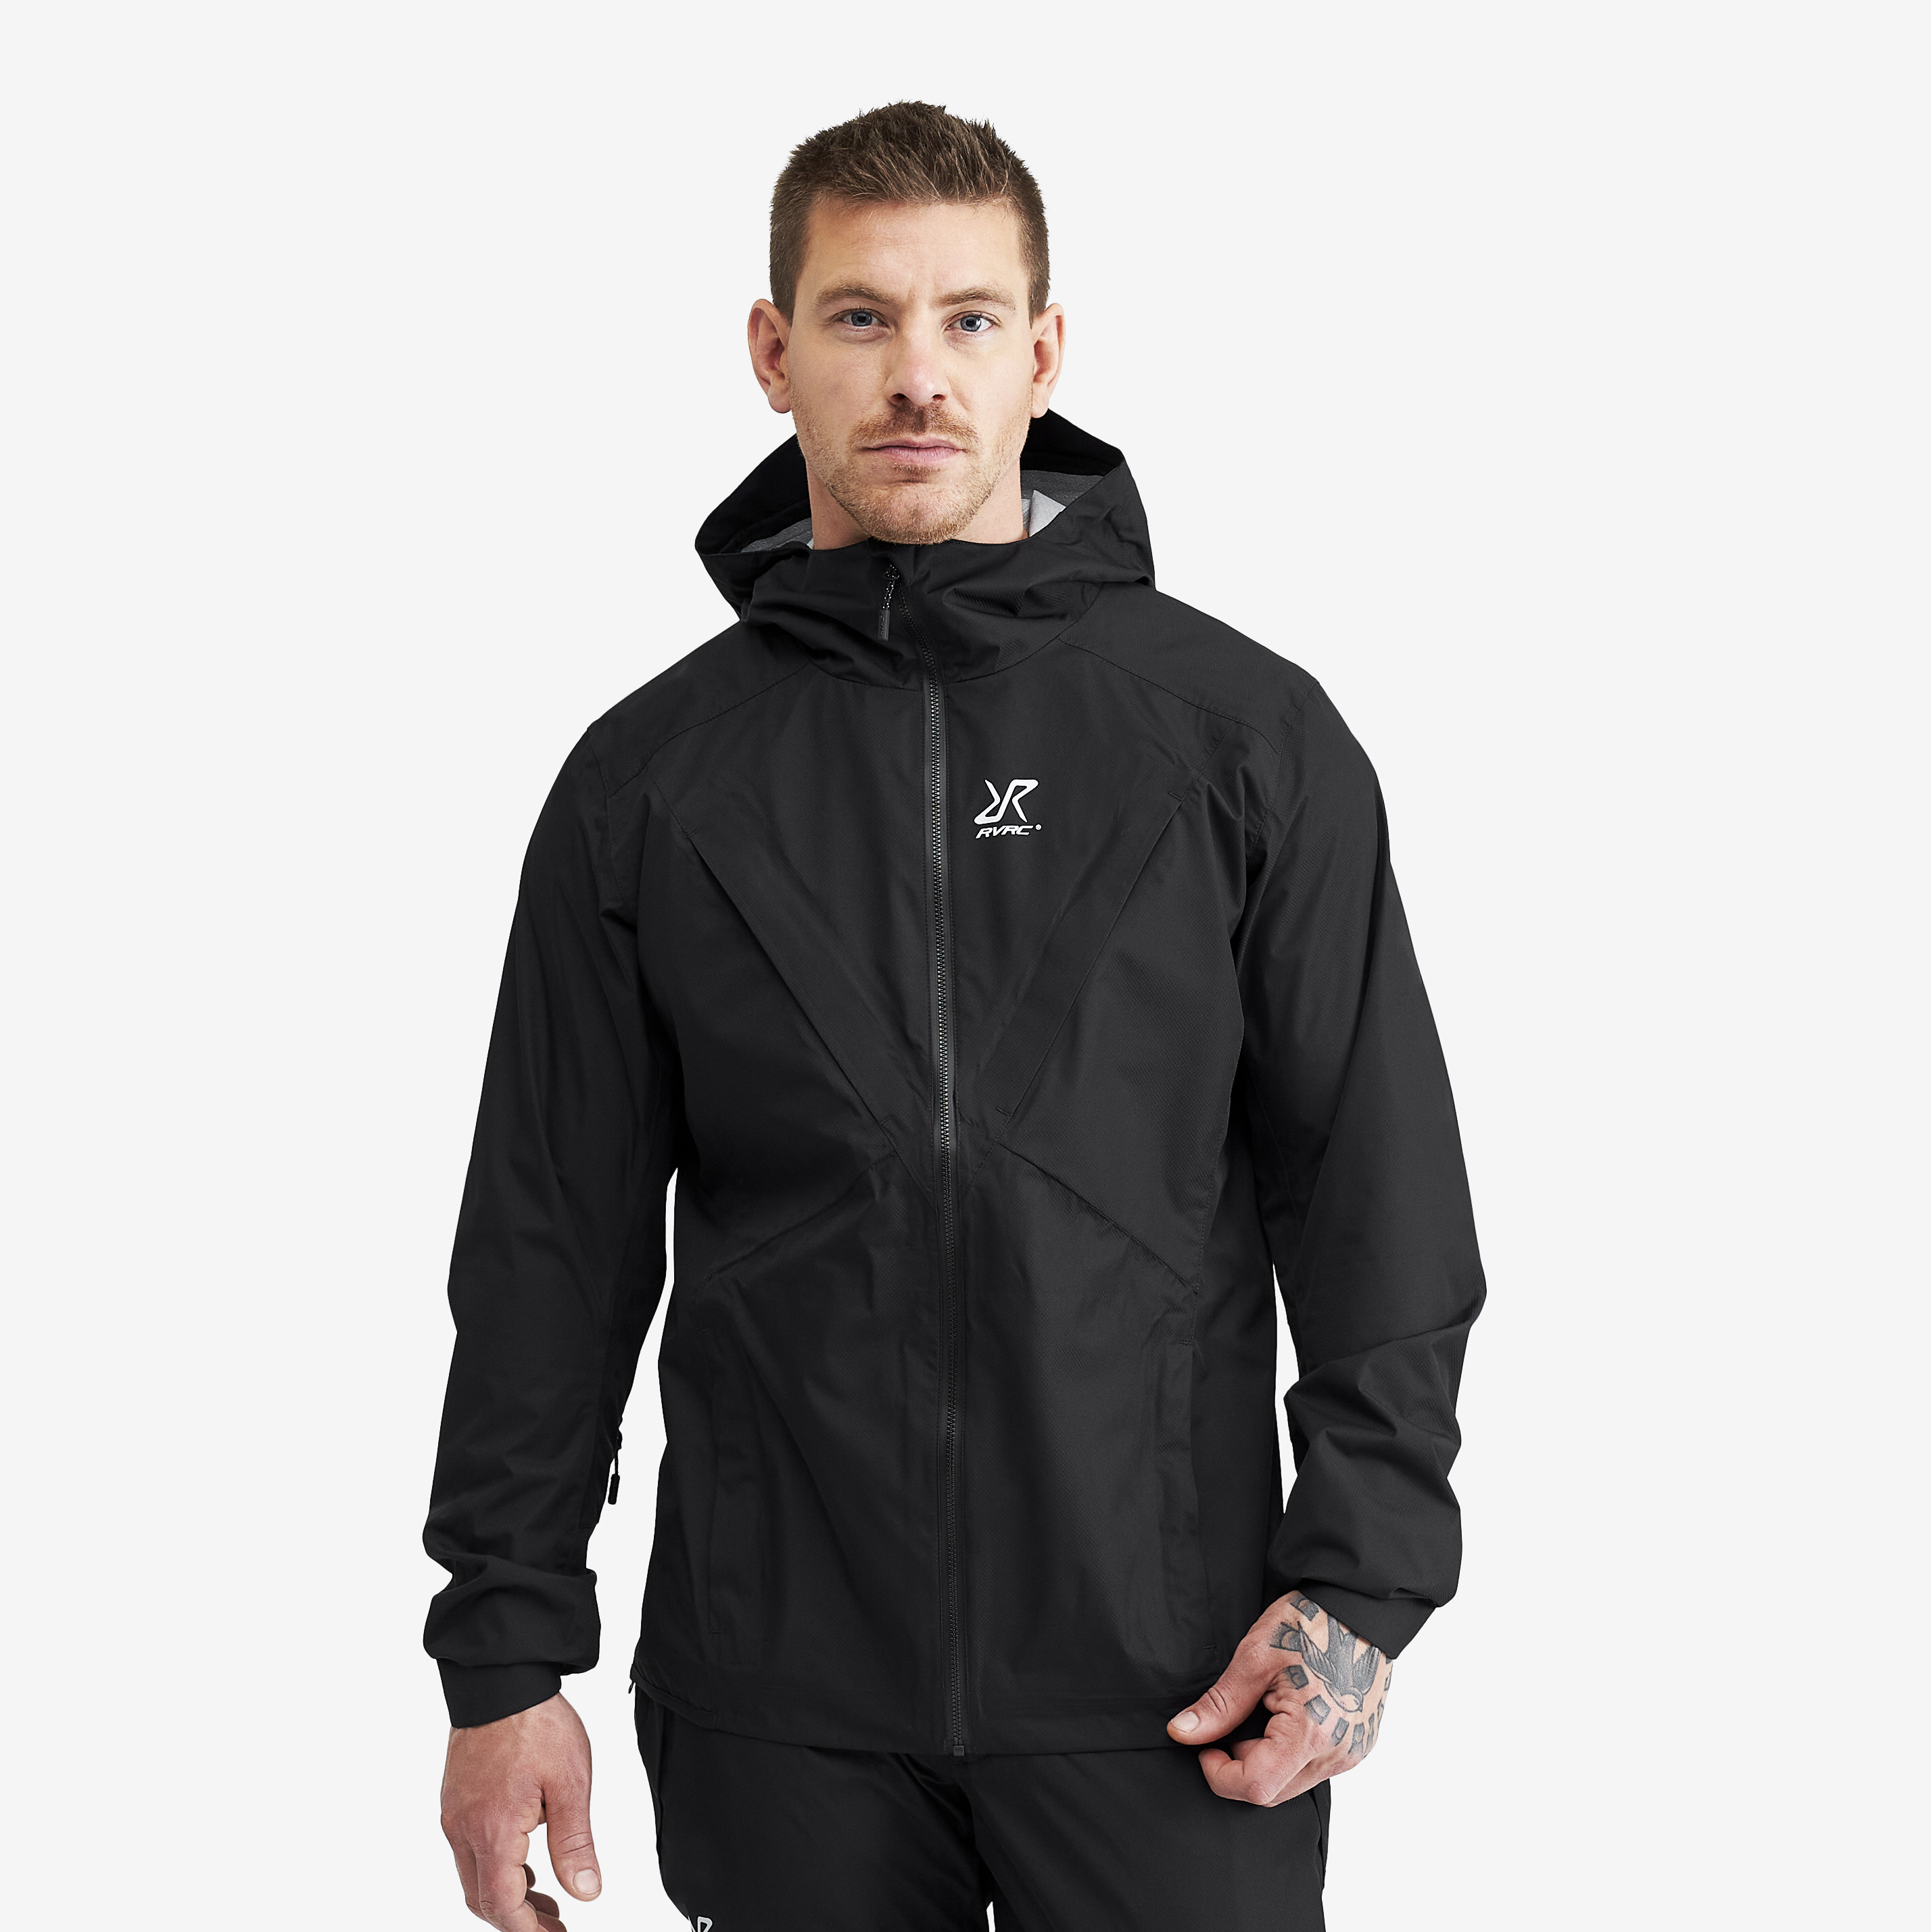 Typhoon rain jacket for men in black